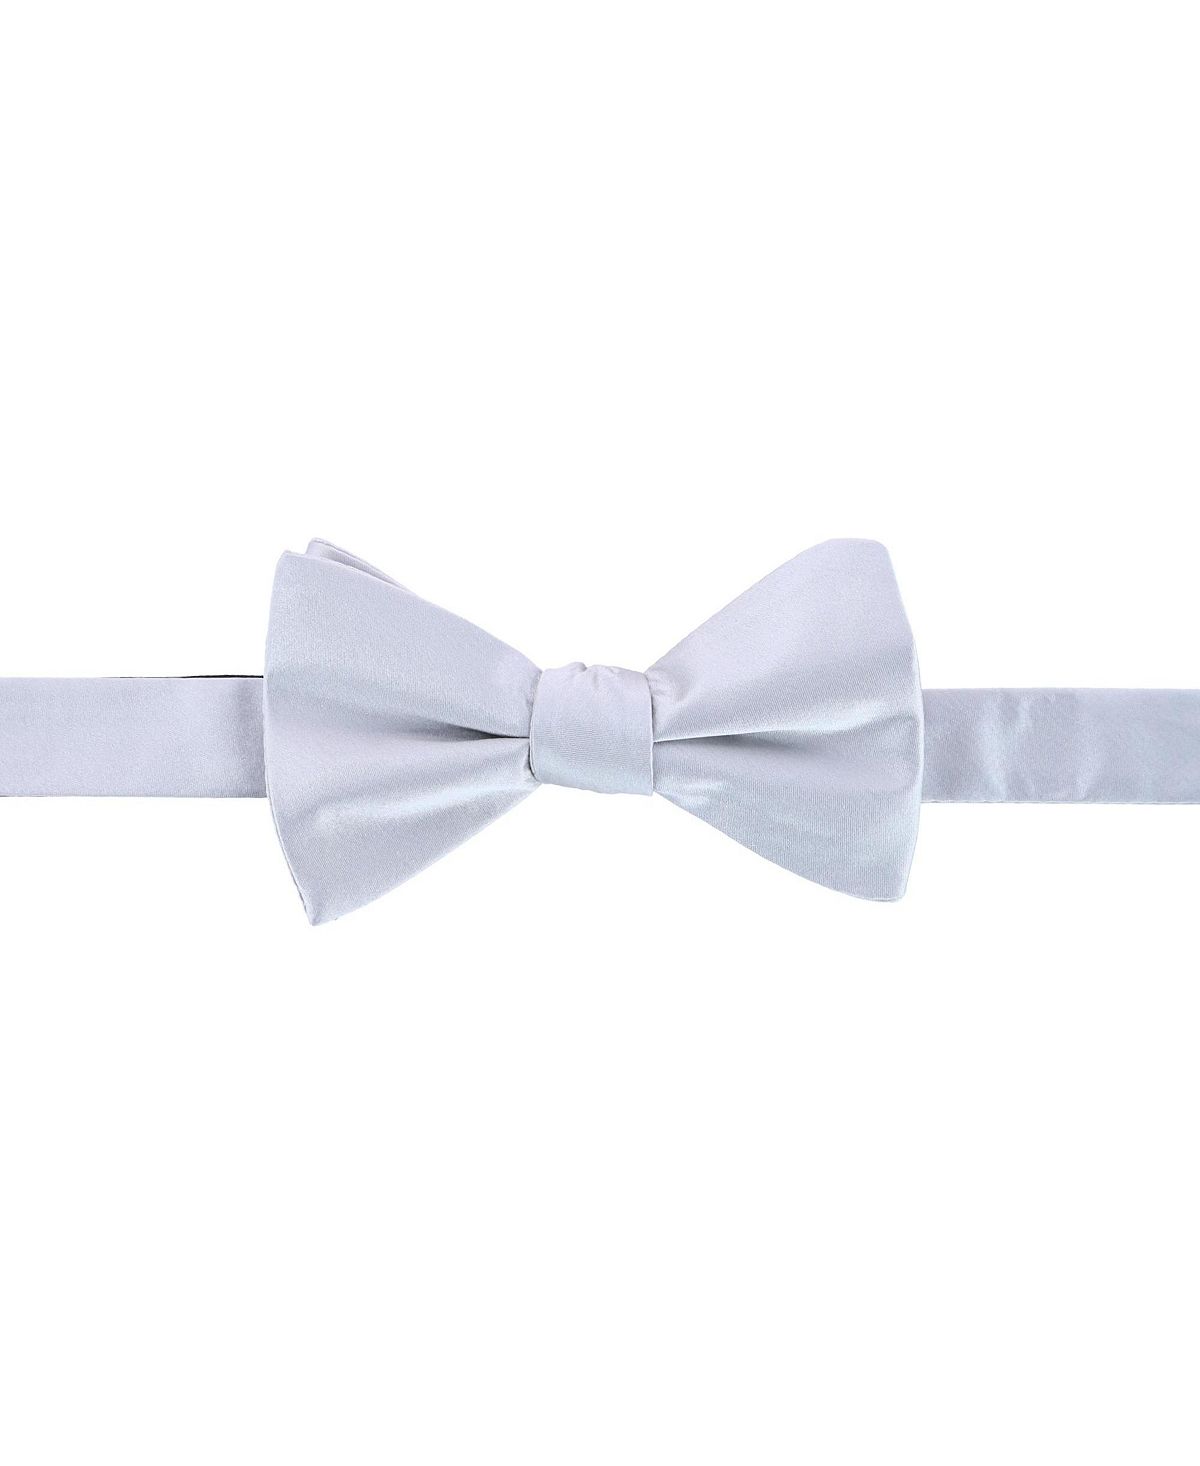 Однотонный шелковый галстук-бабочка Sutton TRAFALGAR серый галстук бабочка самовяз rene lezard 64768